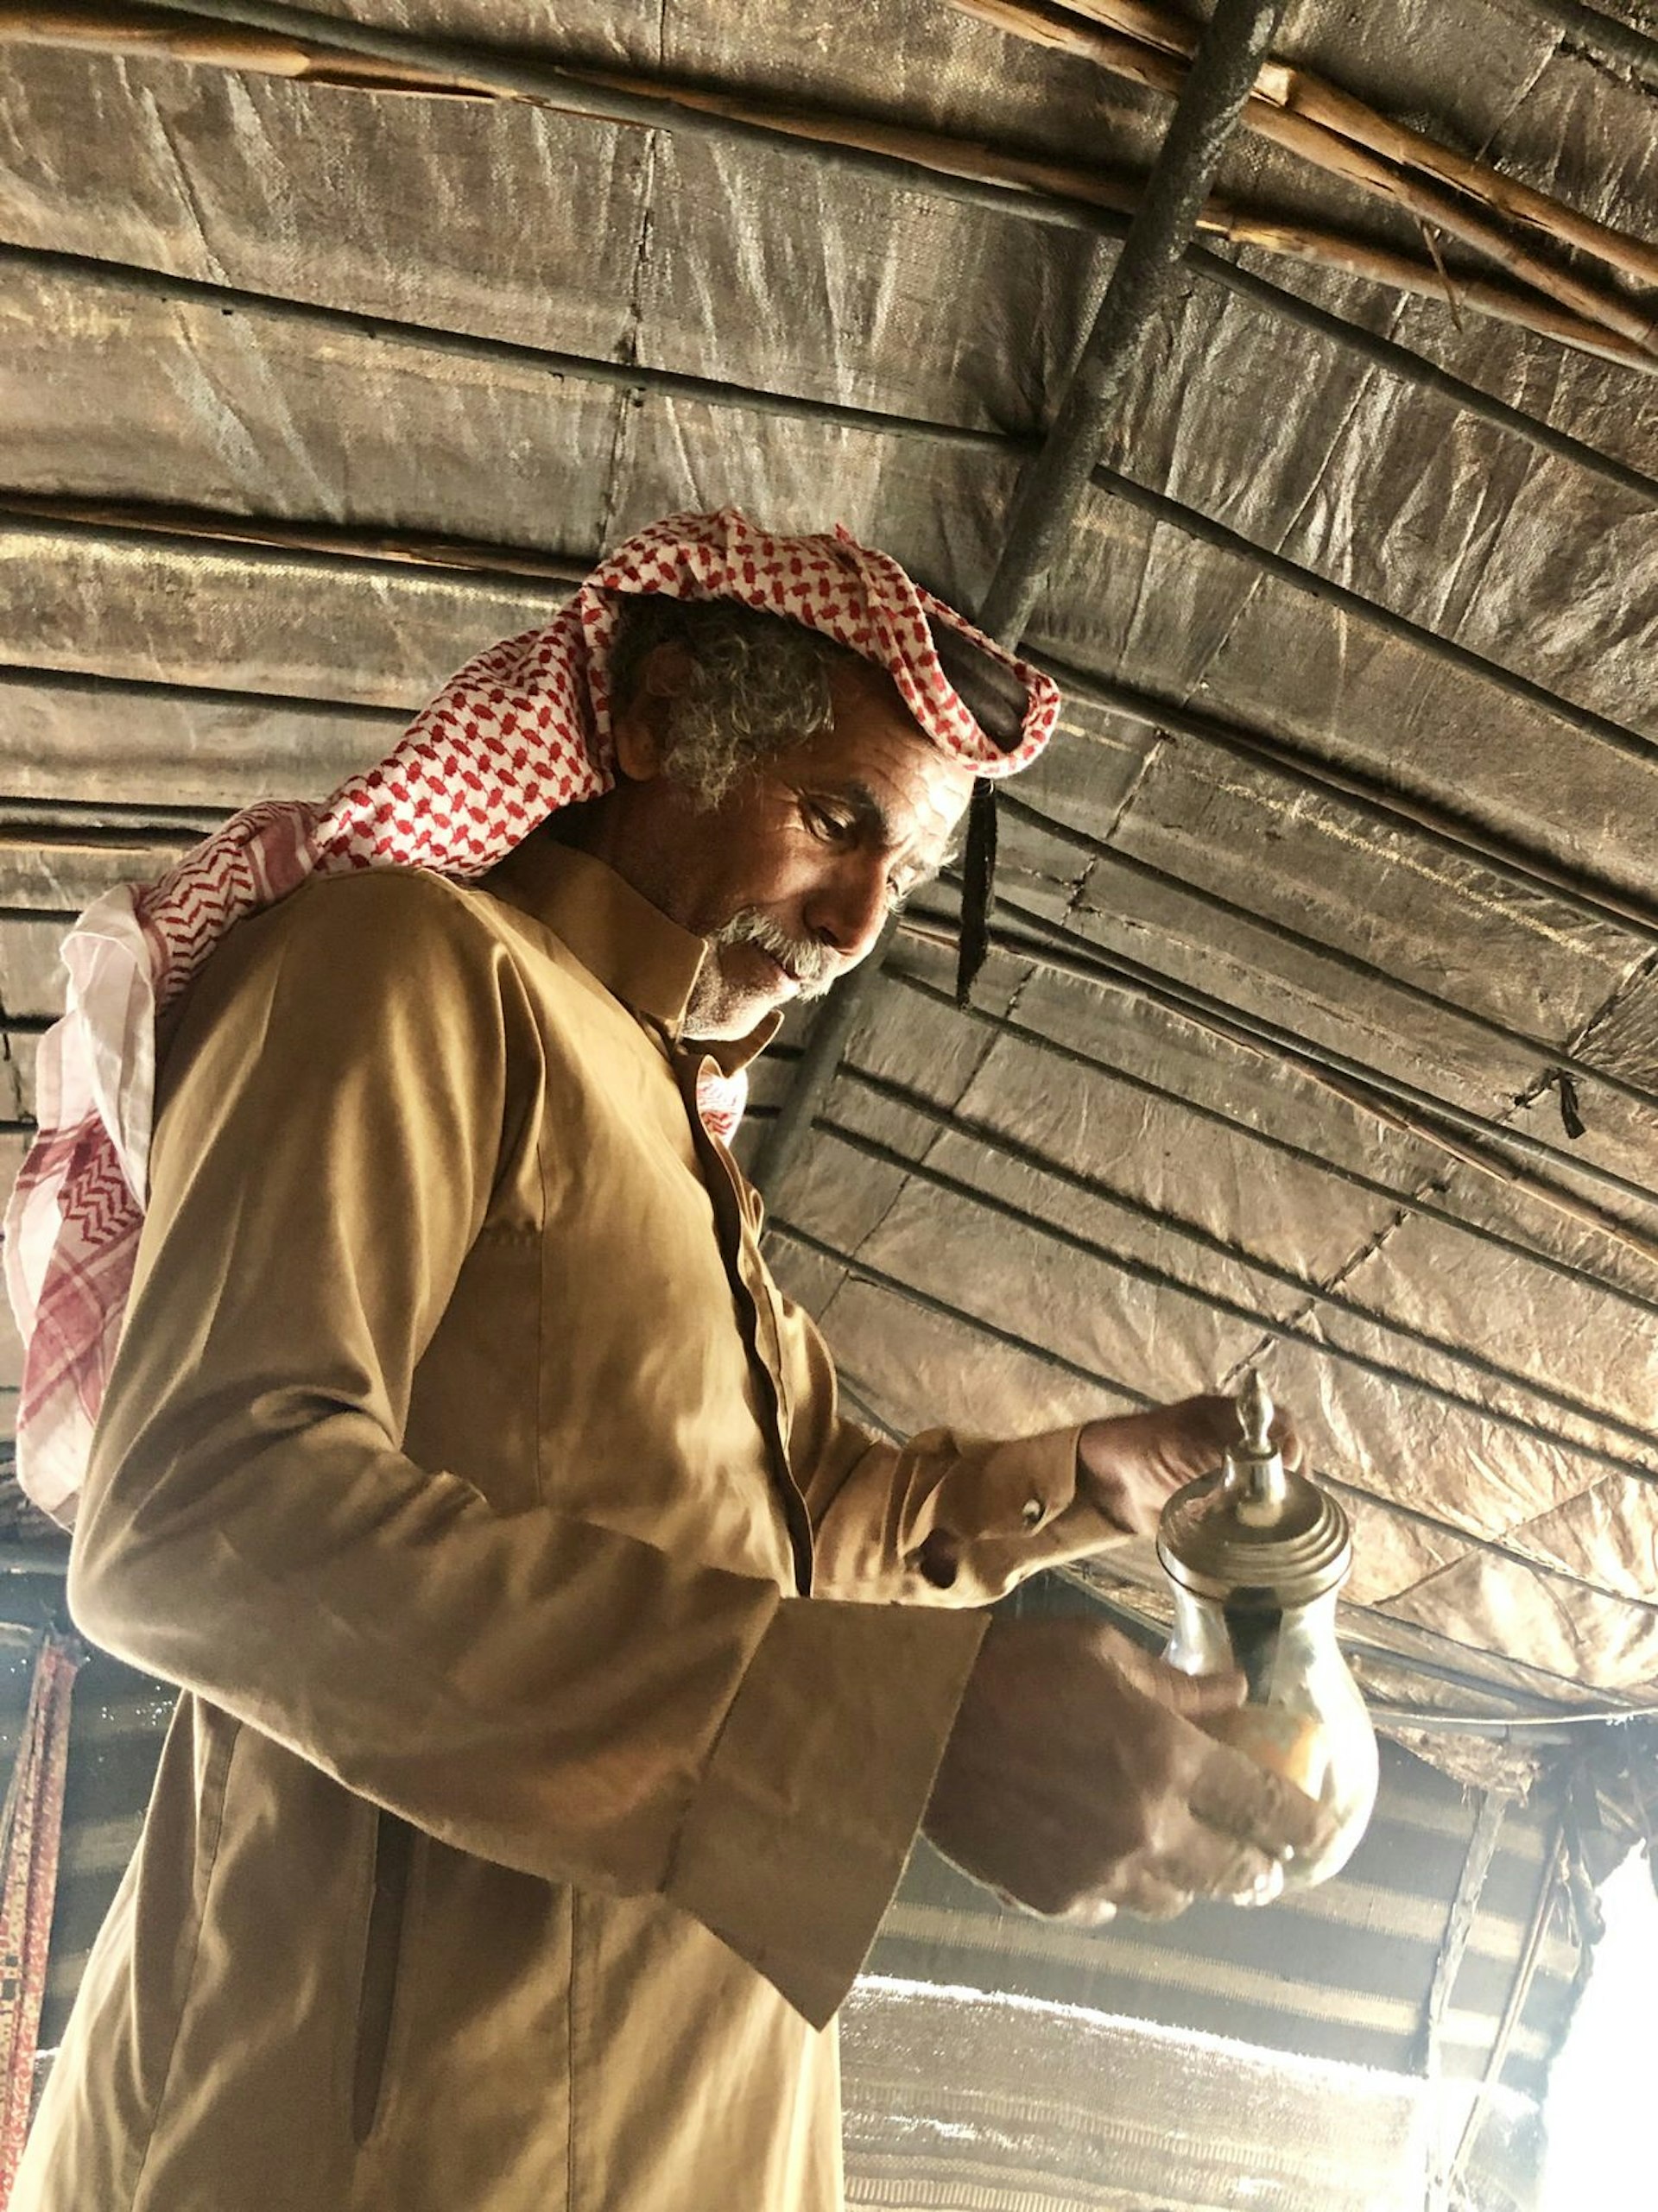 A Bedouin man pours a cup of Arabic coffee, Jordan